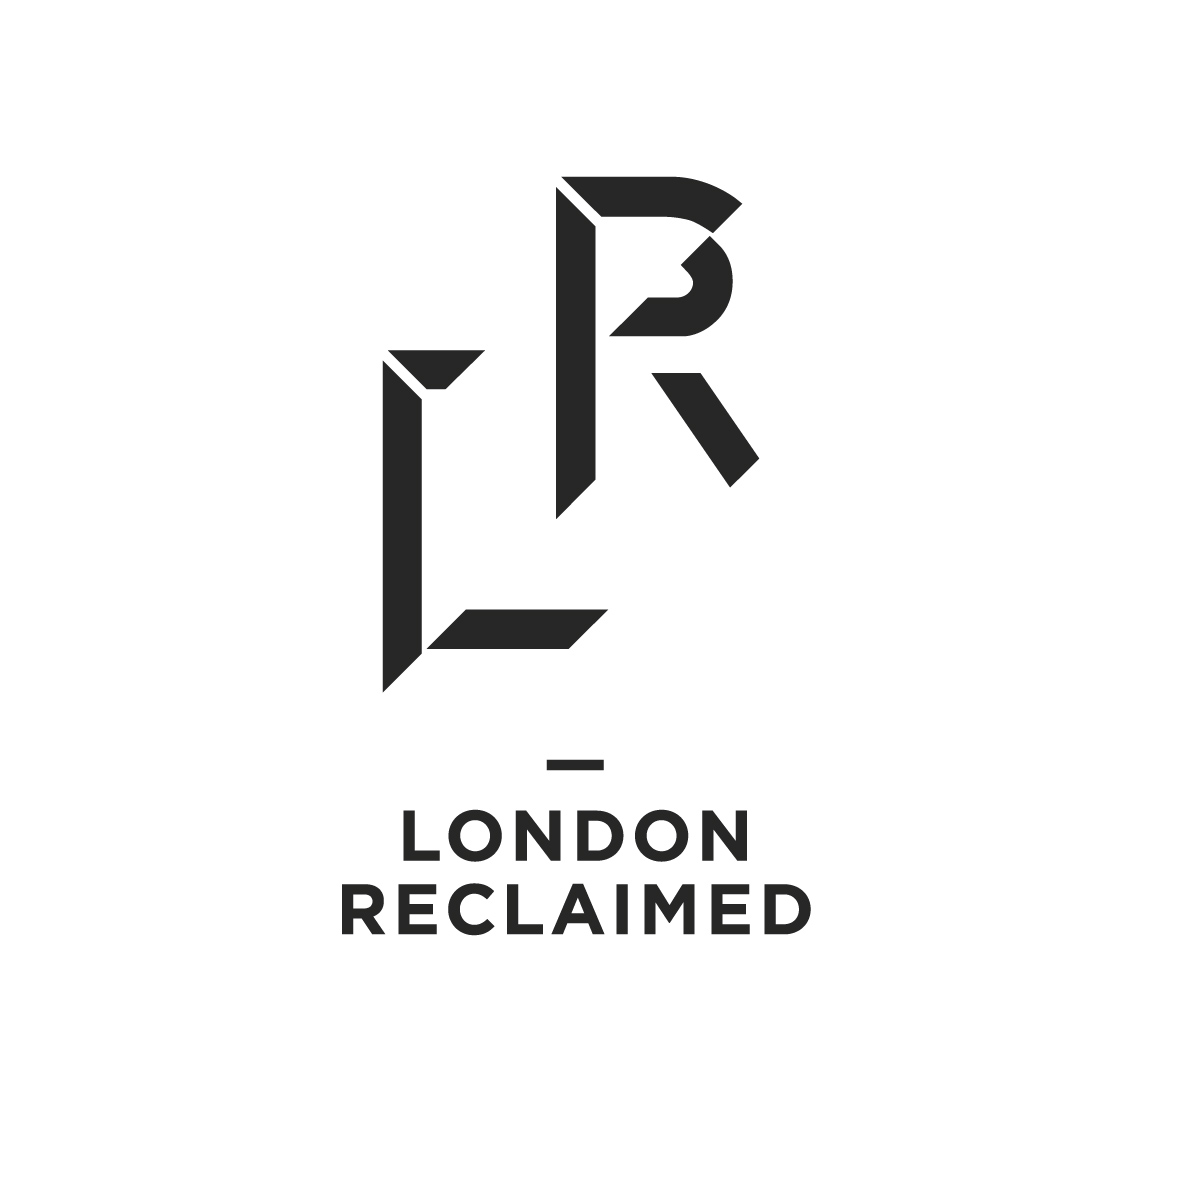 London Reclaimed